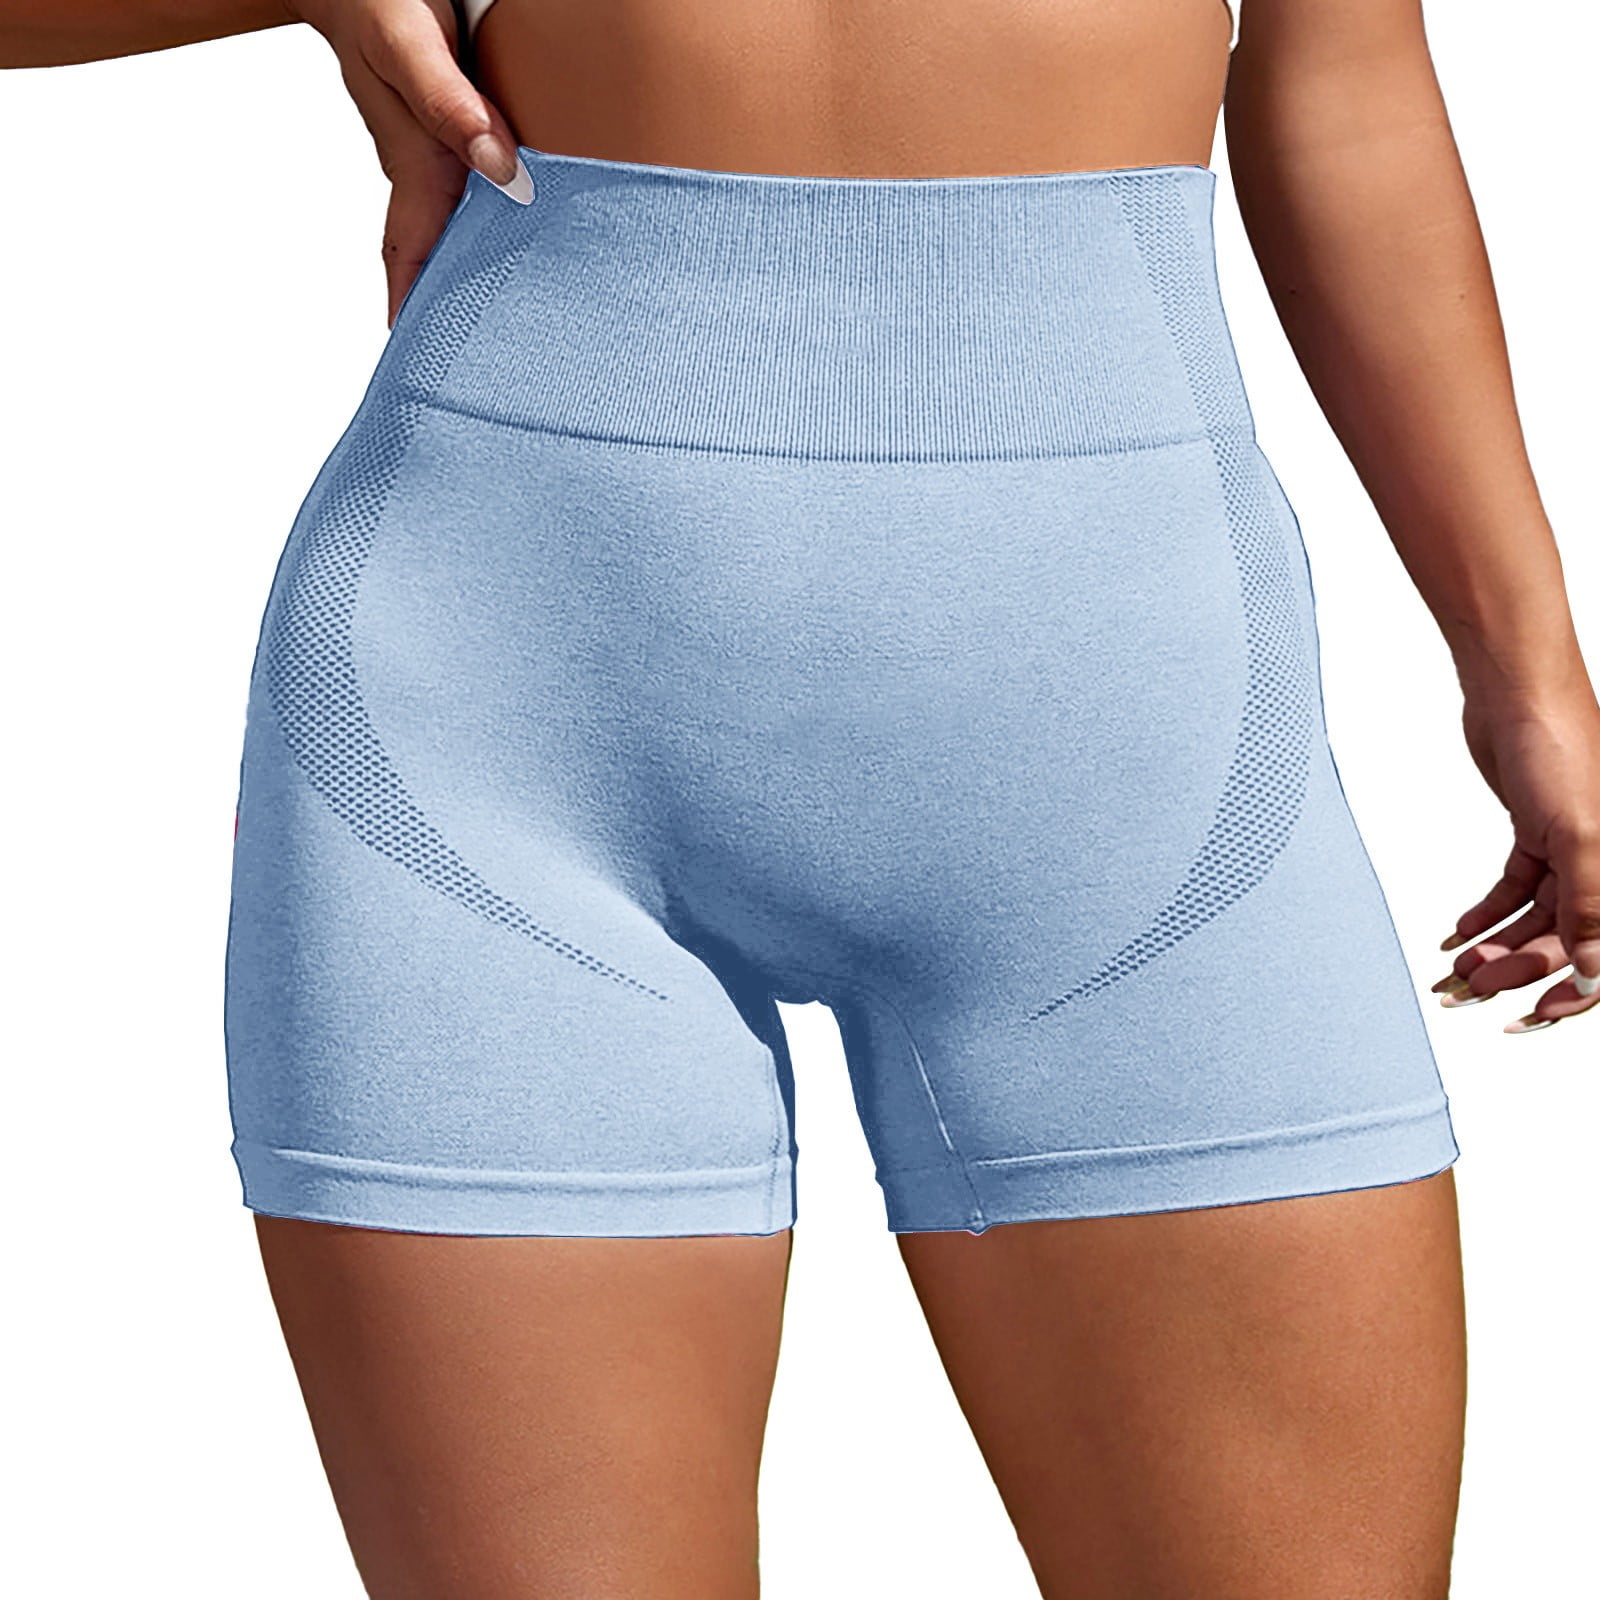 adviicd Short Pants For Women Casual Summer Cotton Yoga Pants